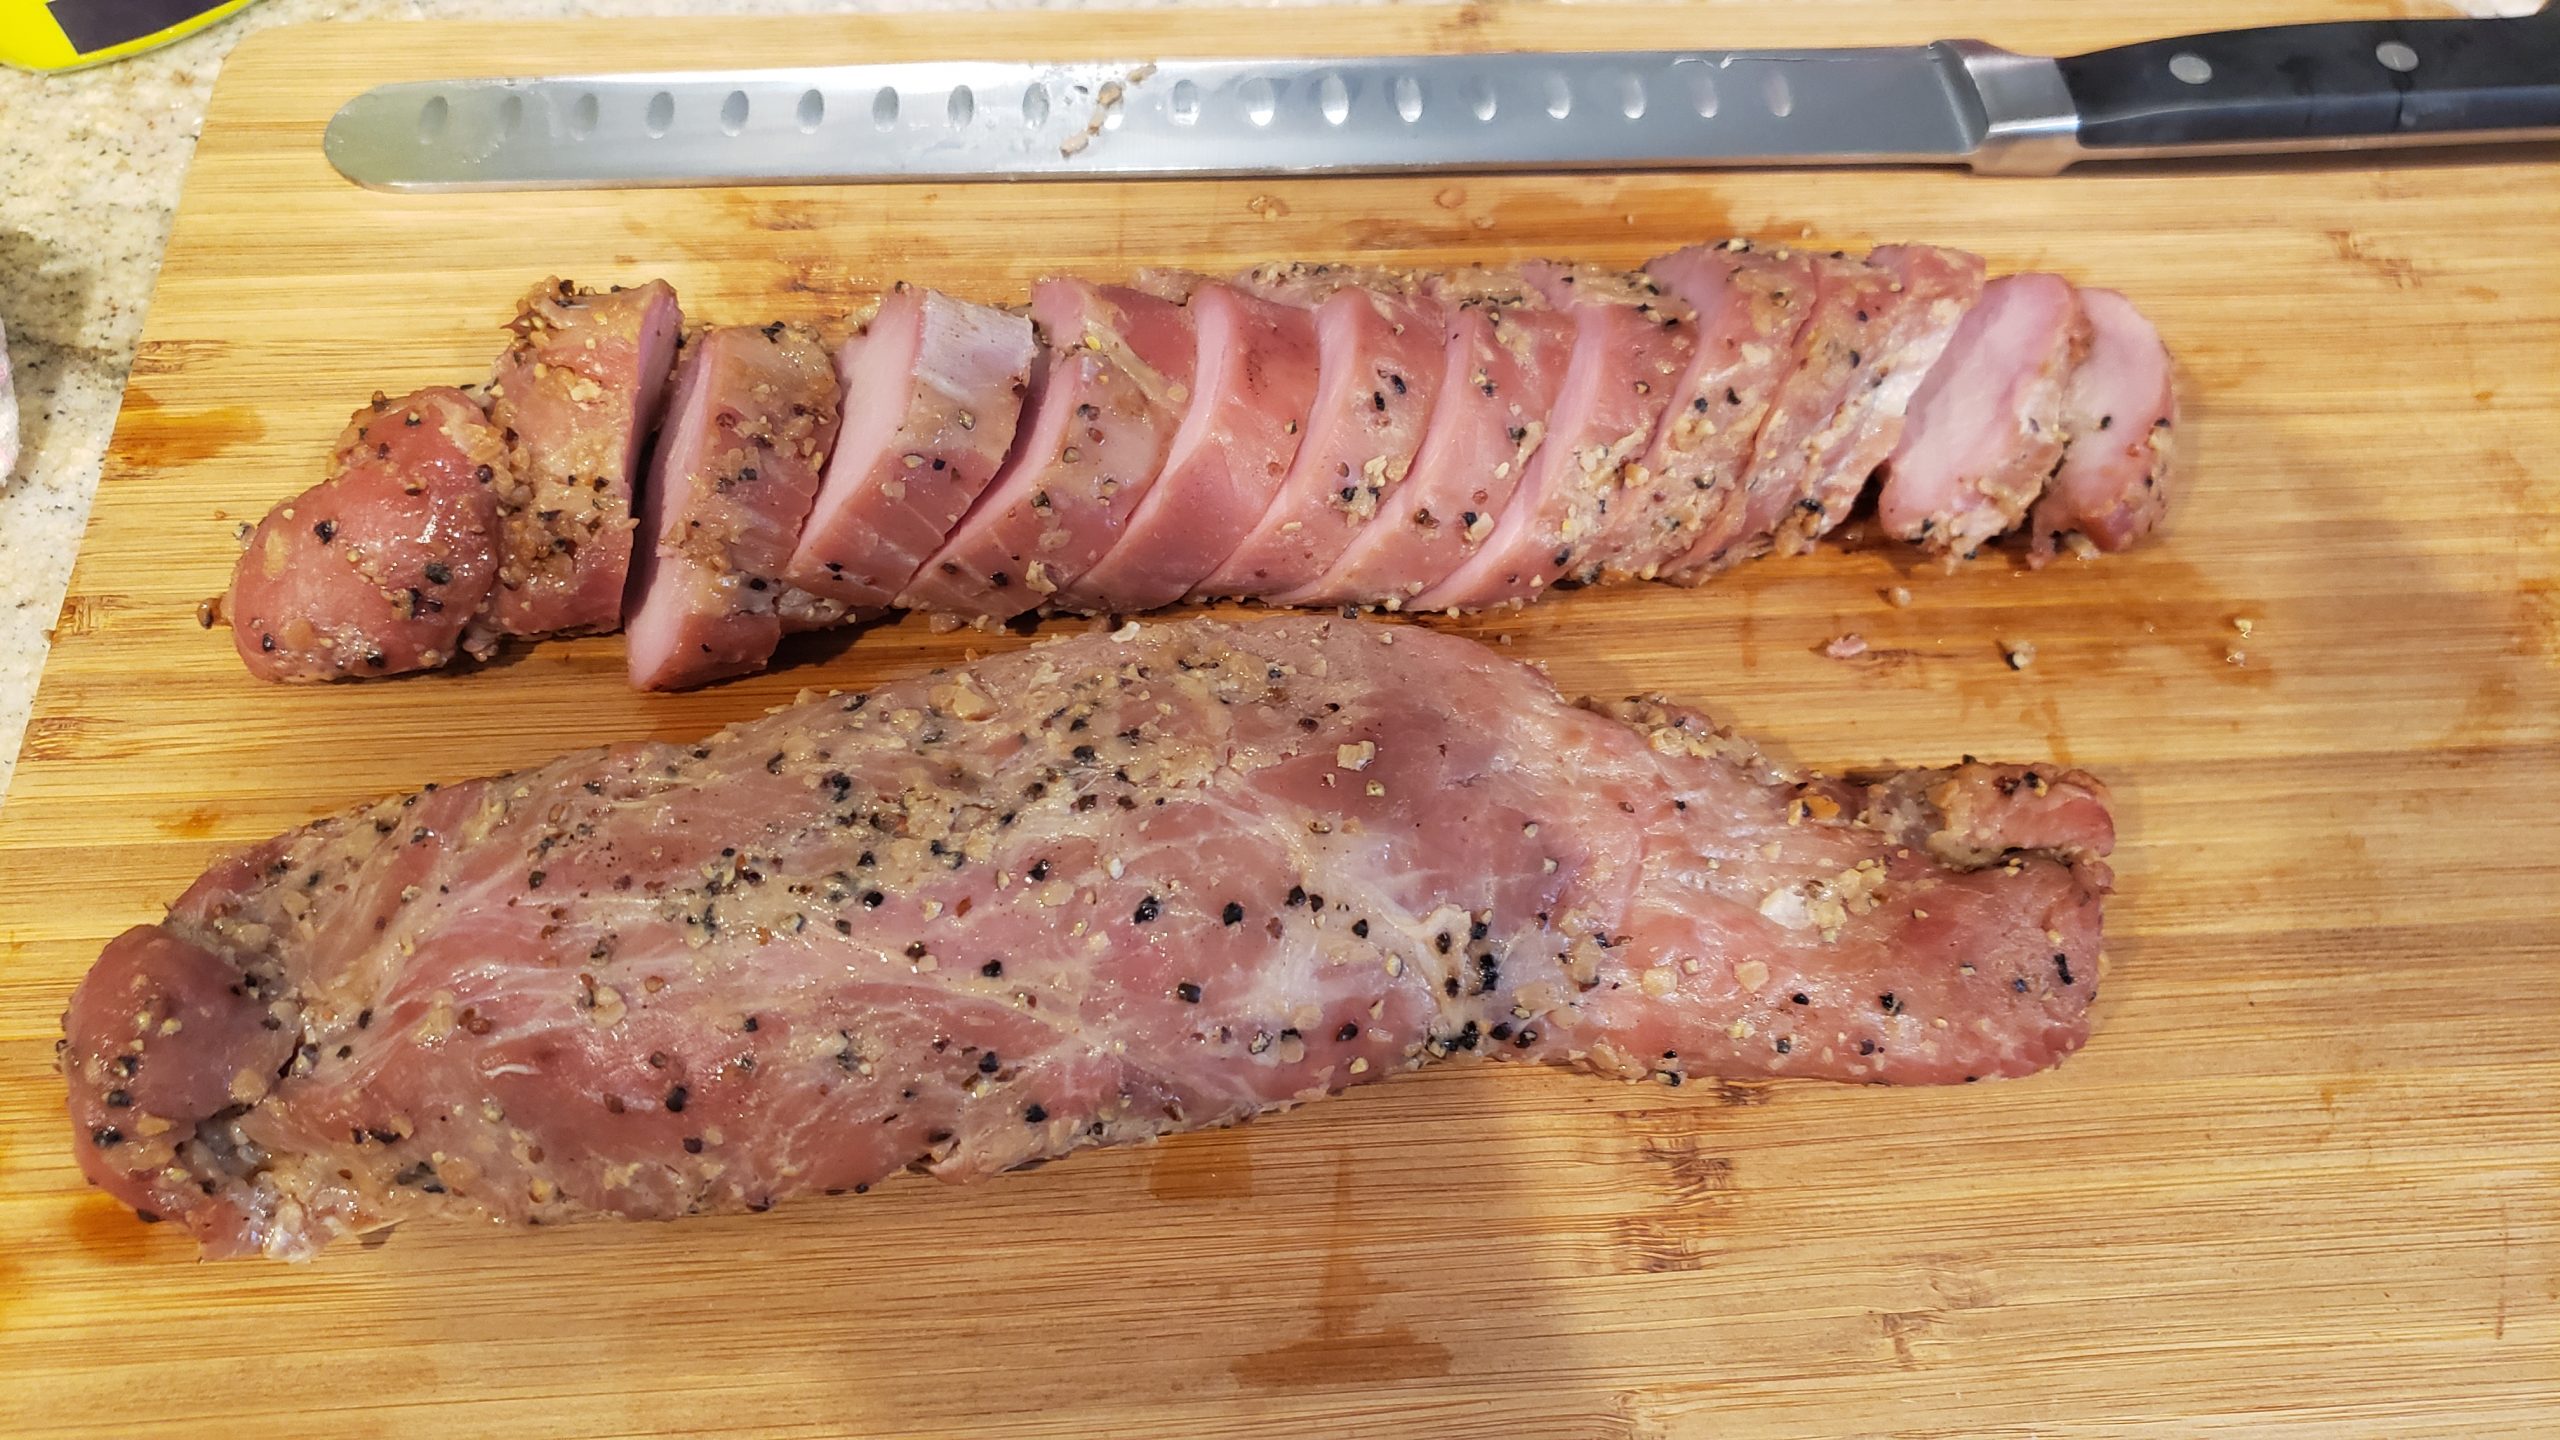 Smoked Pork Tenderloin On The Grill – BBQ Pork Tenderloin Recipe